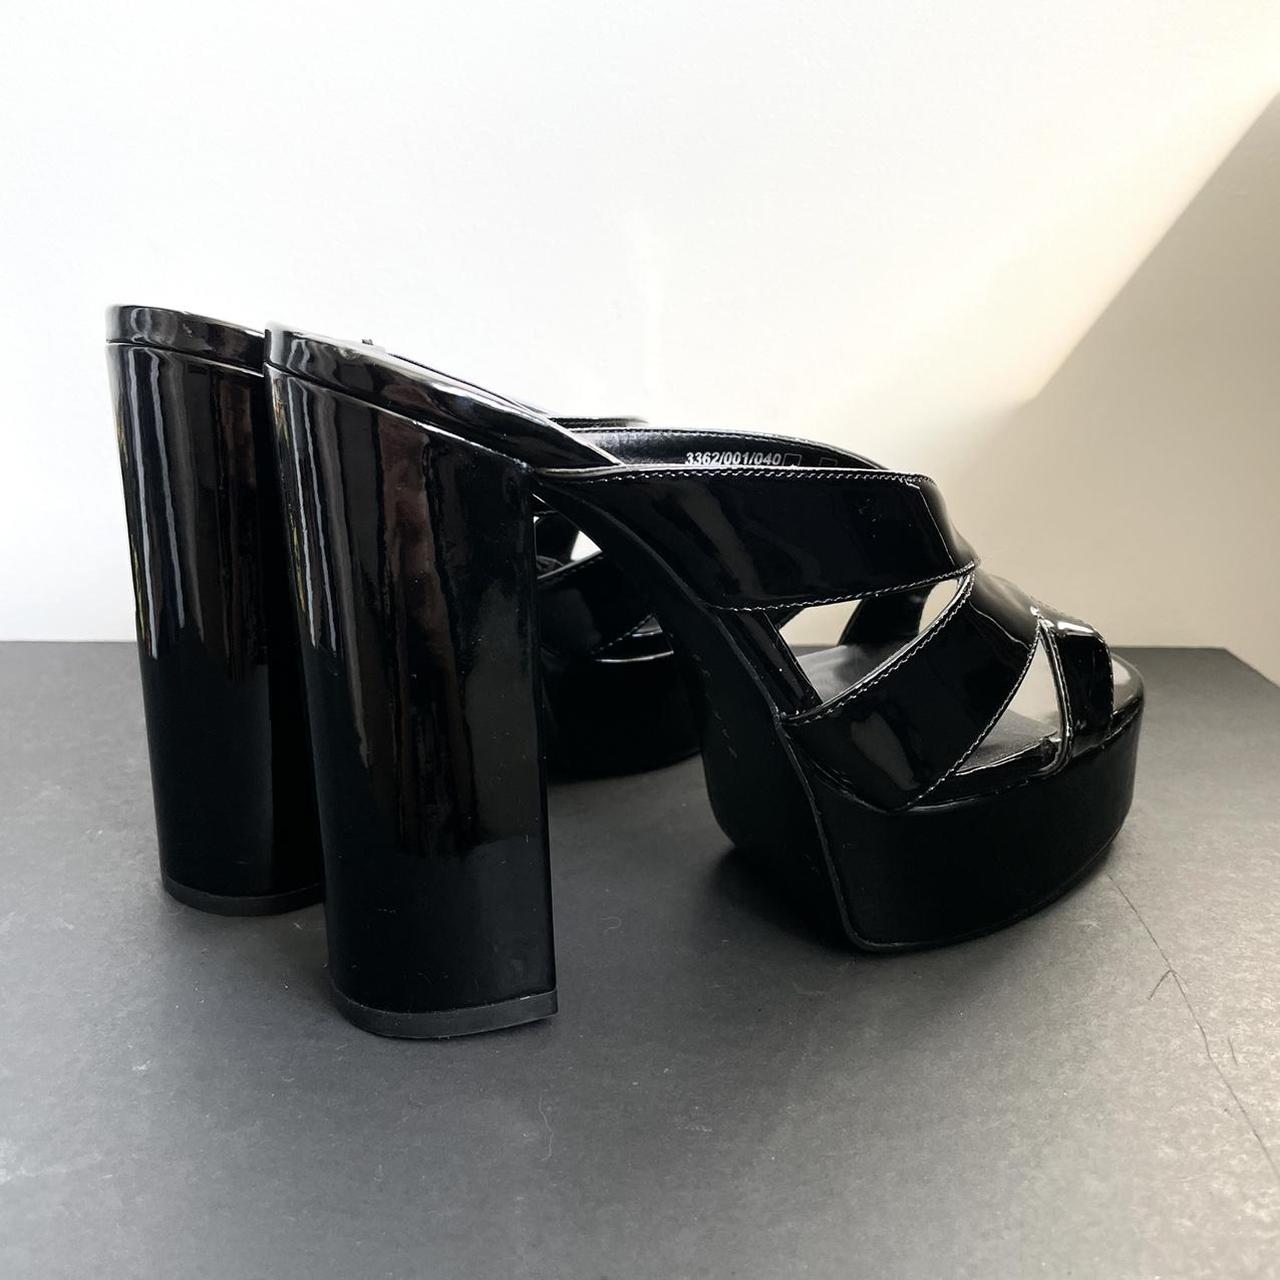 Zara | Trafaluc Platform Sandal heels/ pumps in... - Depop